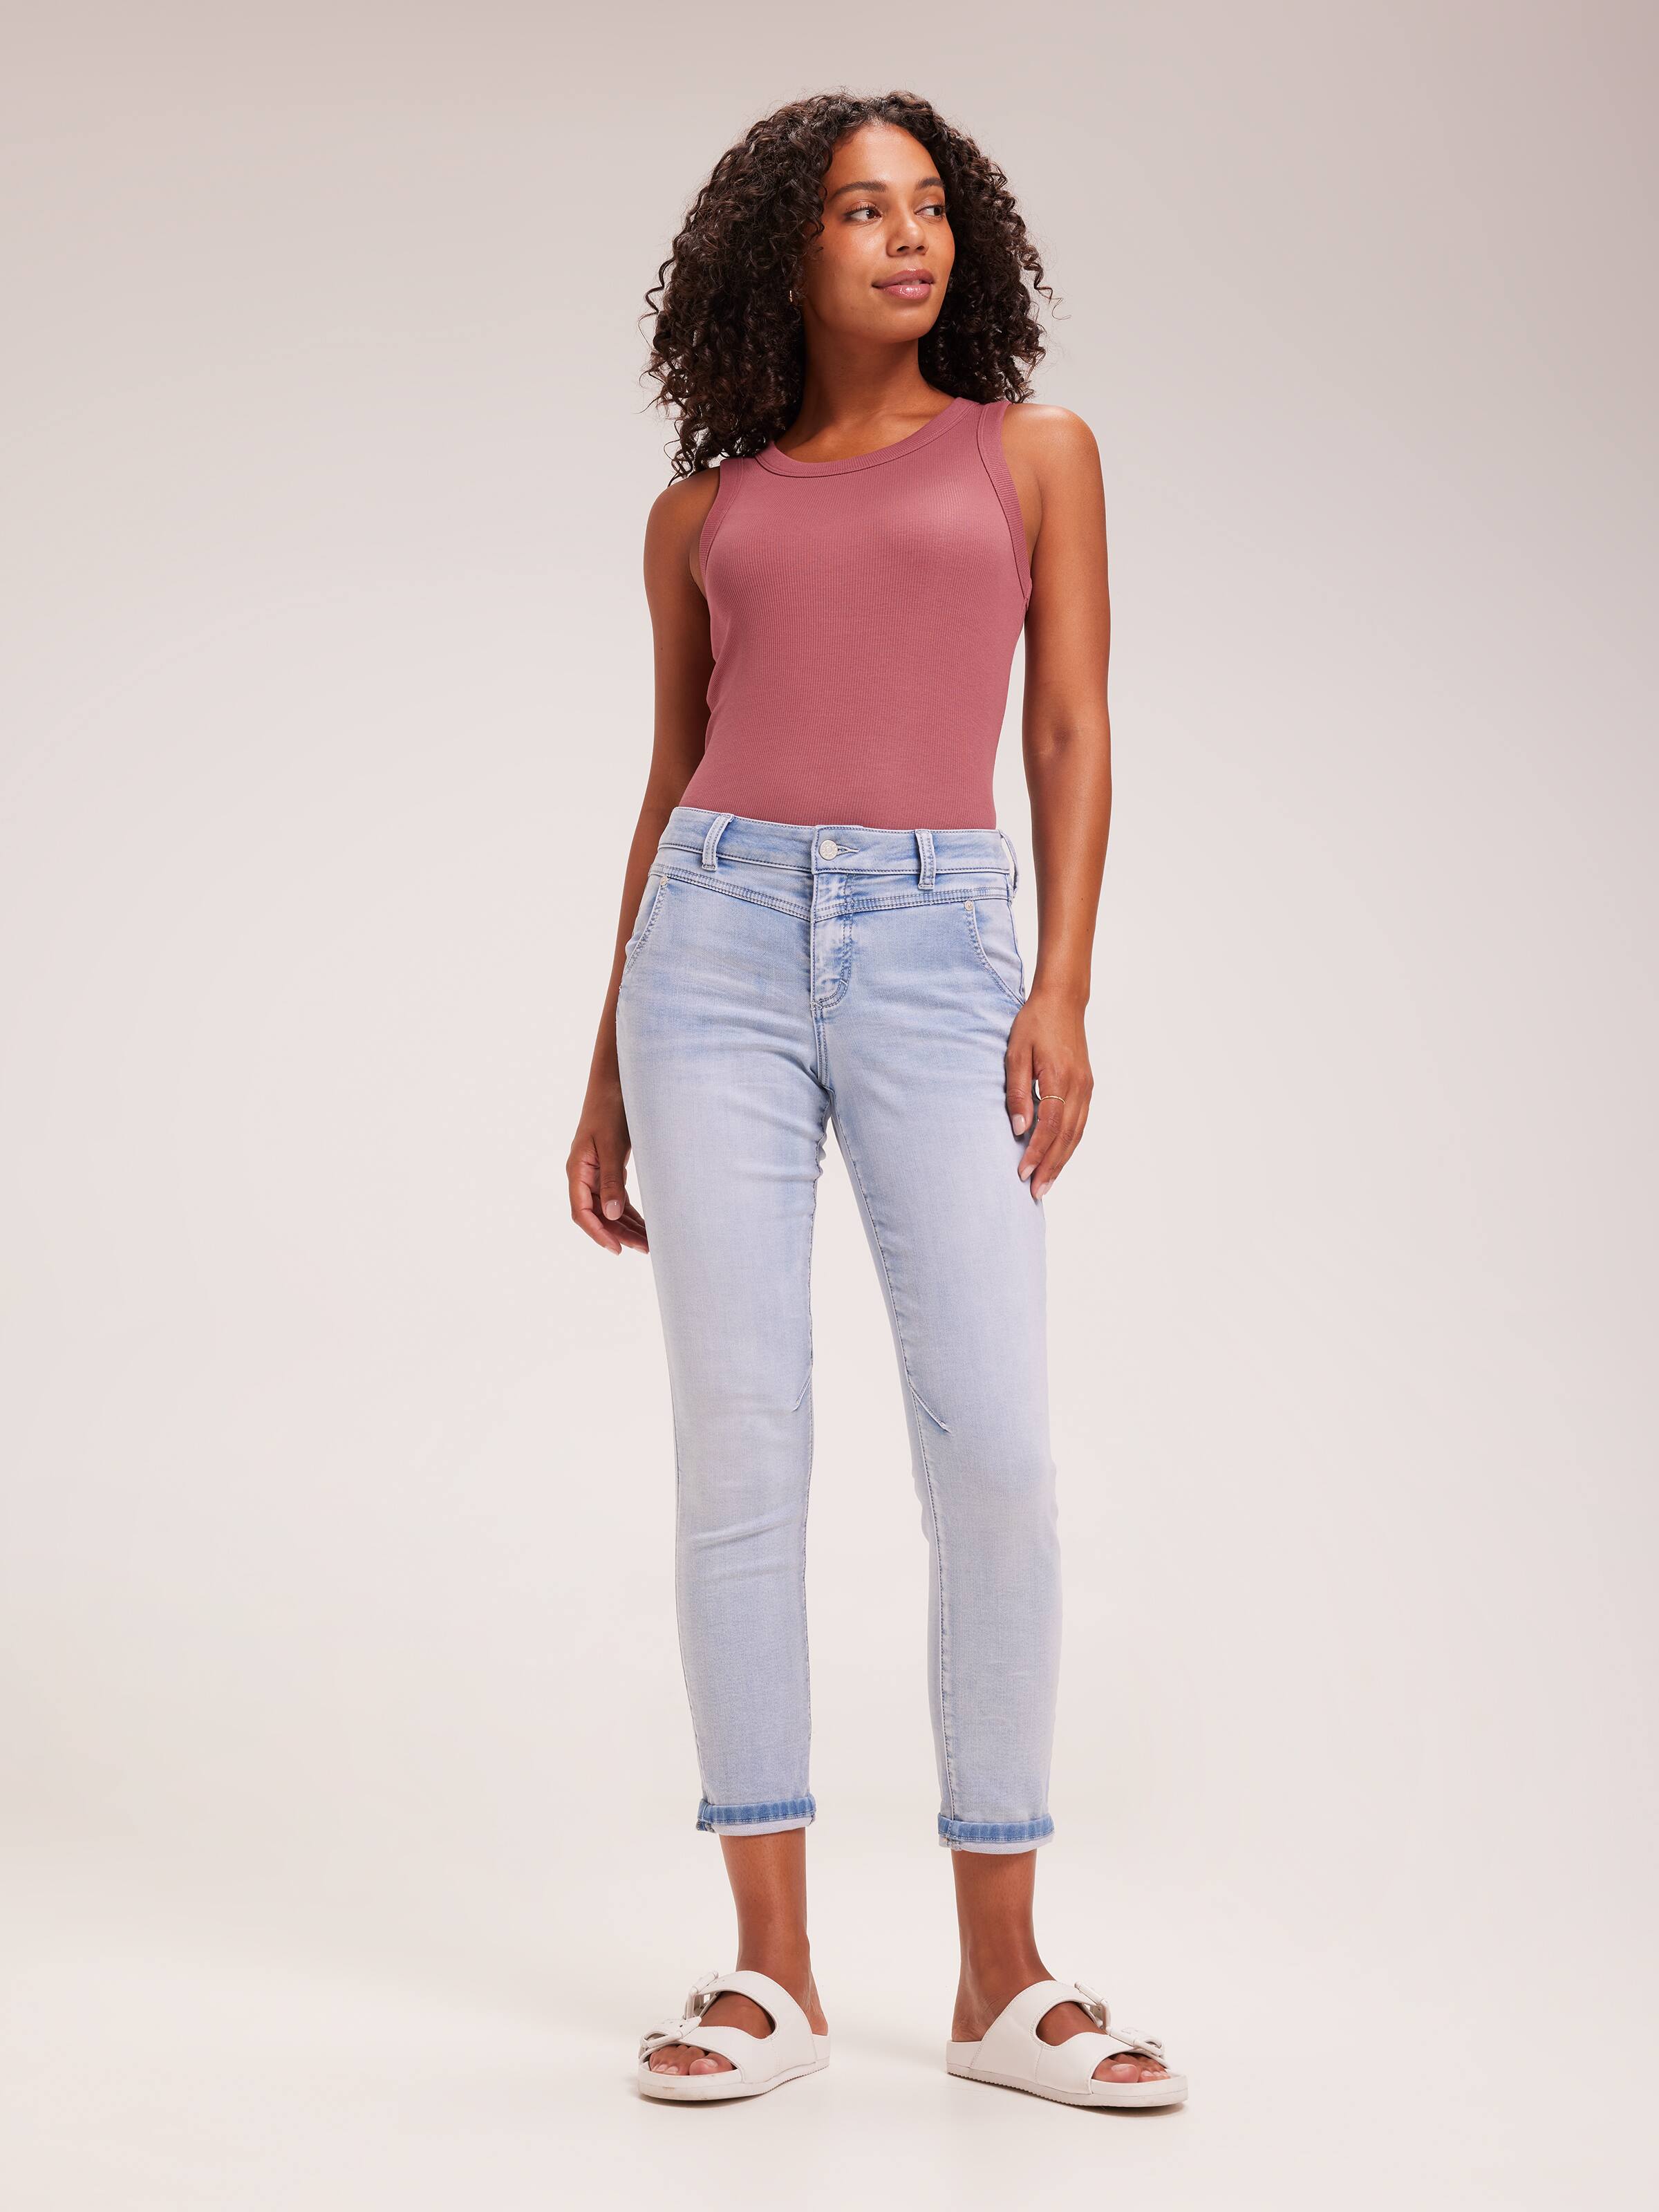 Women's Jeans - Bootcut, Slim, Boyfriend & More